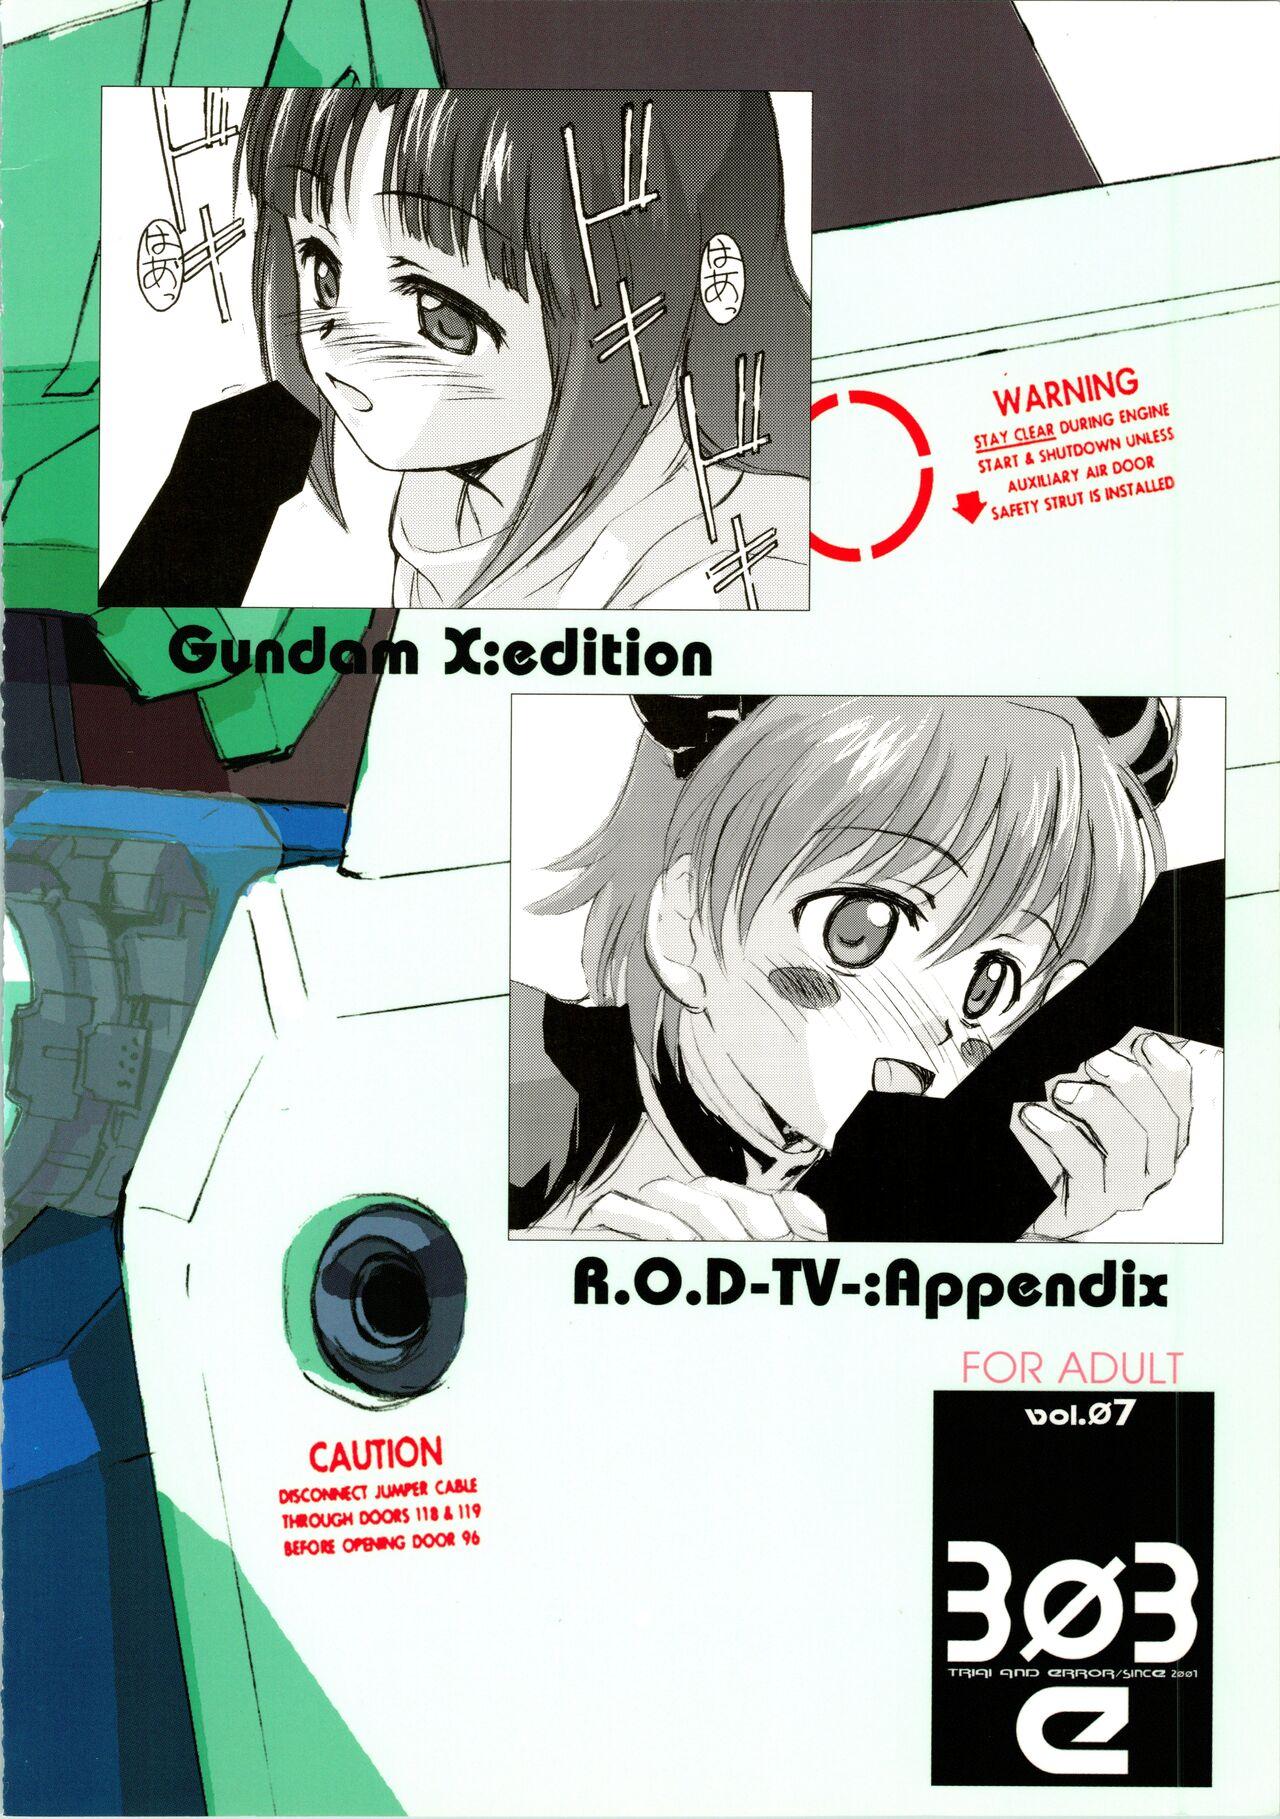 Dildos [WINDFALL (Aburaage)] 303e Vol. 07 (Gundam X, R.O.D the TV) ZHOA8229 - Read or die Gundam x Blackdick - Page 28